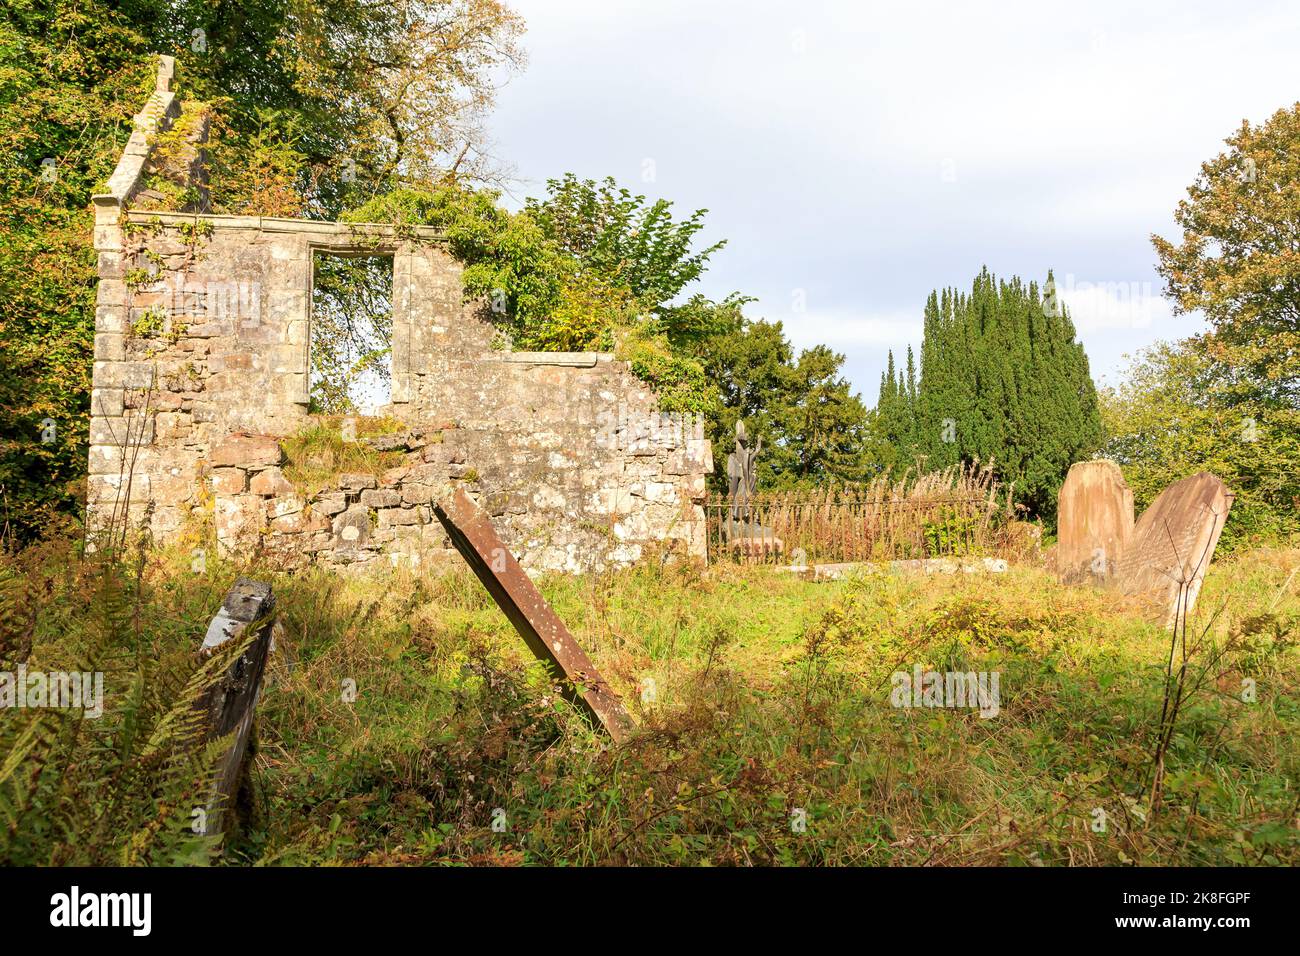 Springkell, Scotland - September 28 2022 : Springkell Old Parish Church ruins And medieval Graveyard Stock Photo